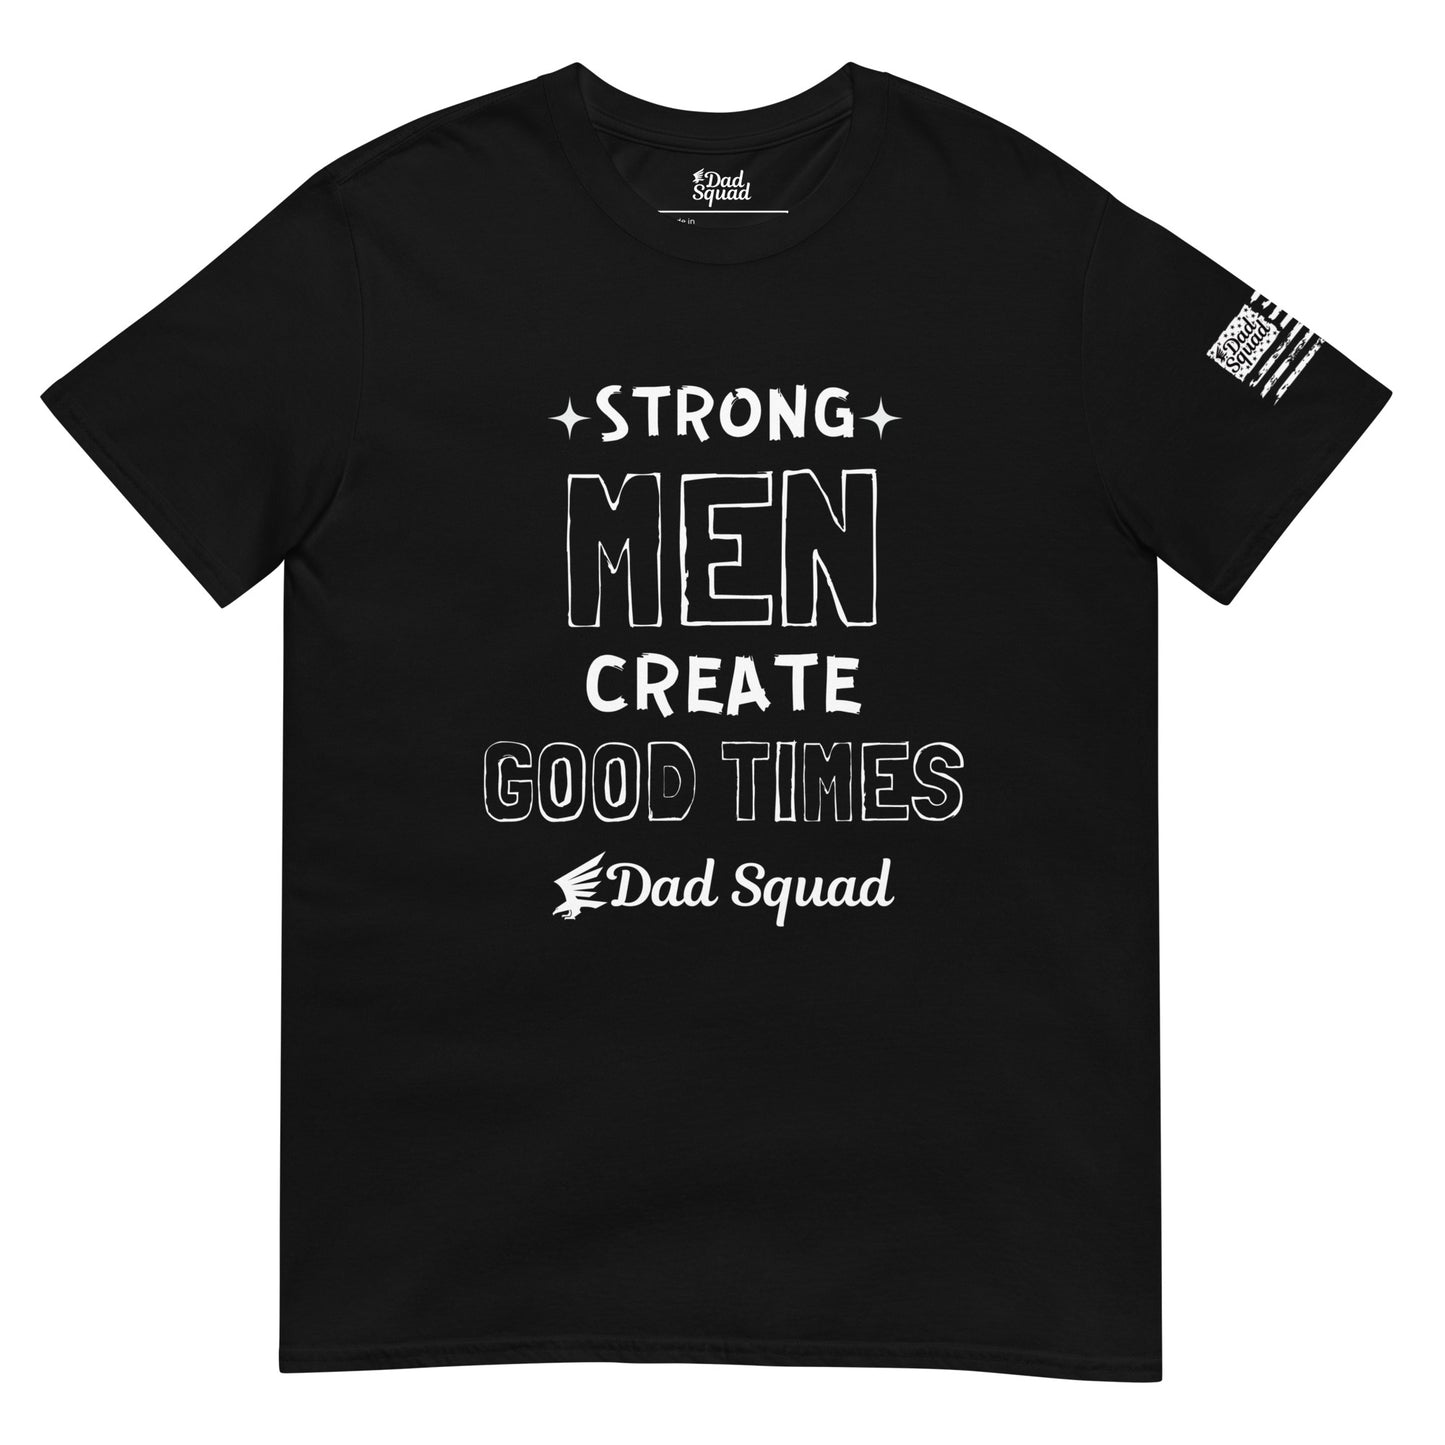 Dad Squad Short-Sleeve T-Shirt - Strong Men